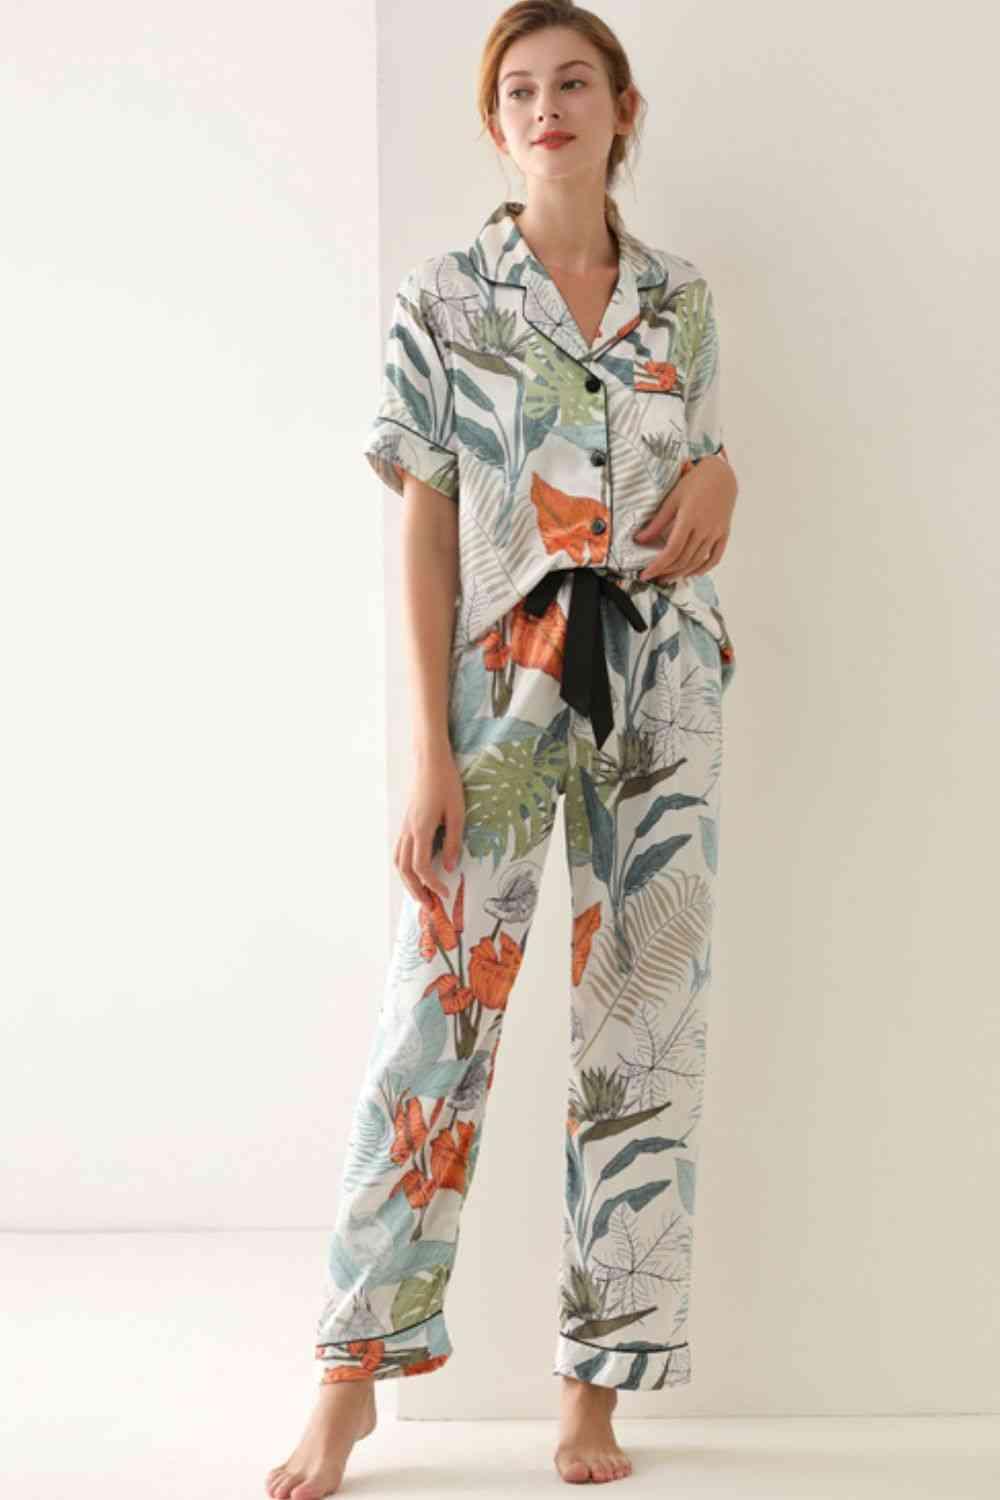 Botanical Print Button-Up Top and Pants Pajama Set - Vesteeto